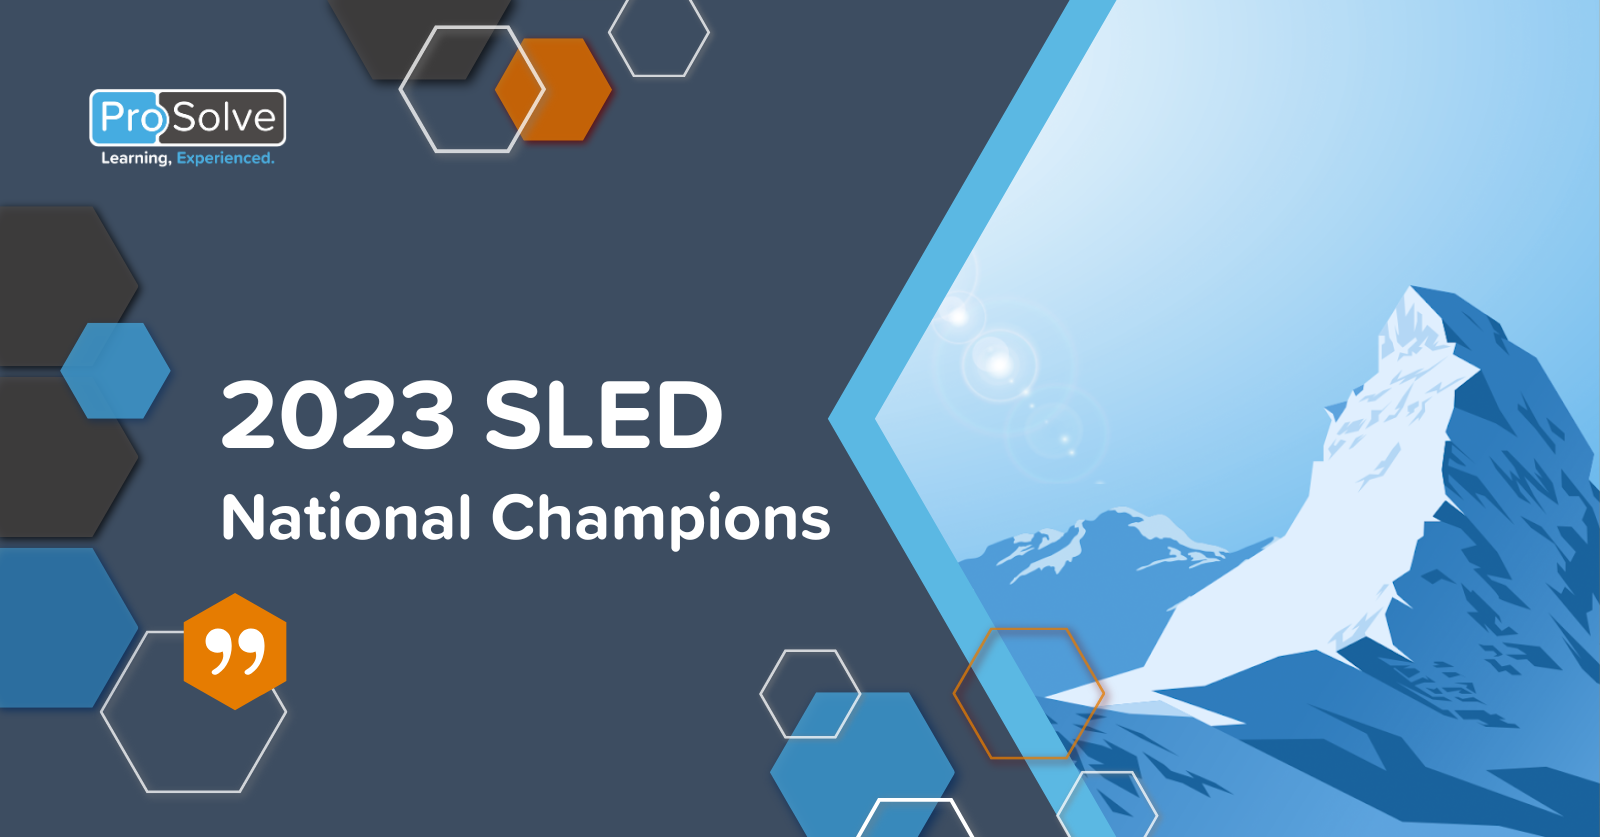 2023 SLED National Champions